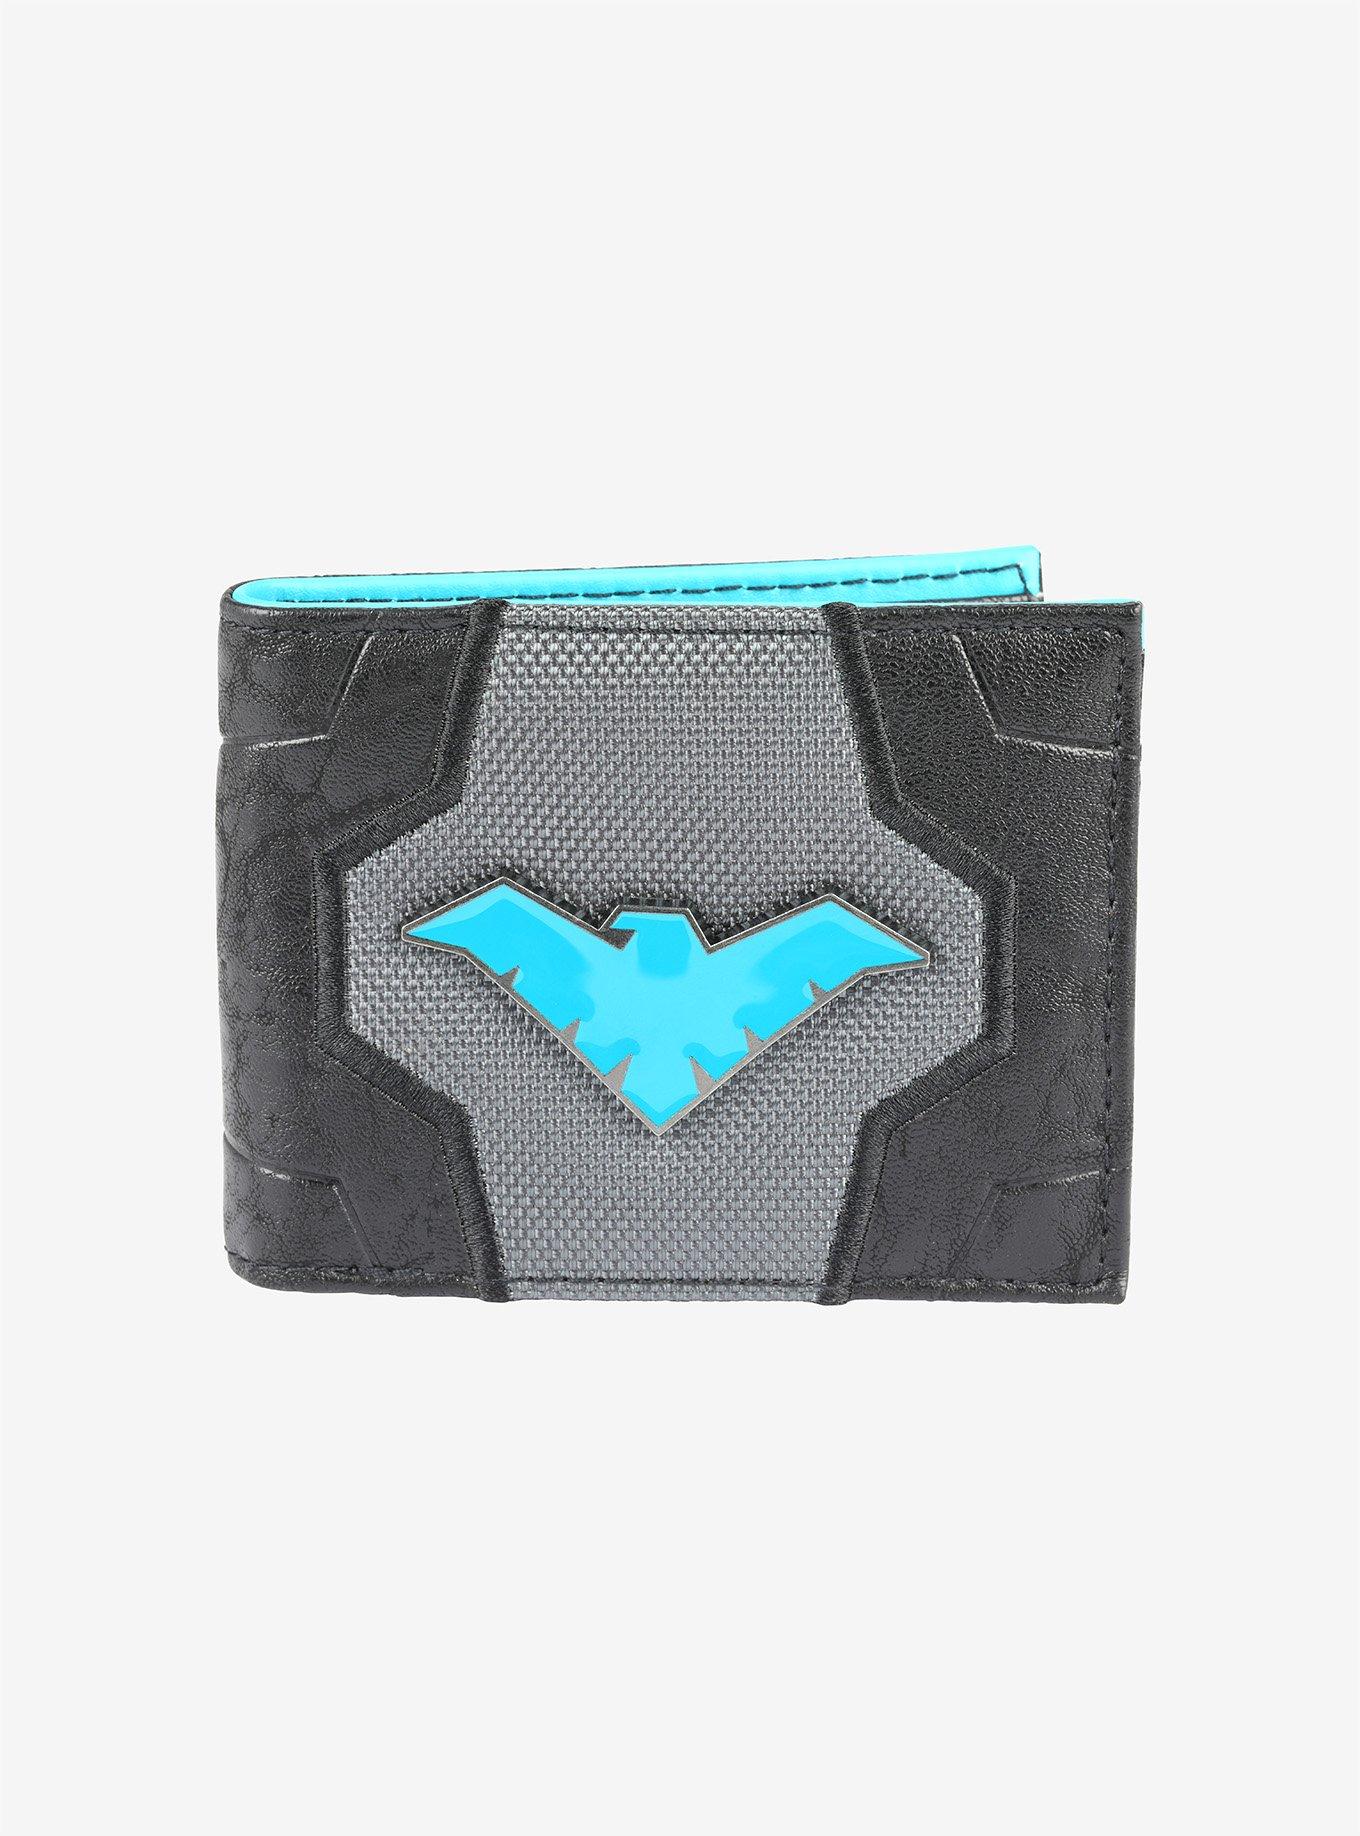 totalmente Nuevo Oficial DC COMICS BATMAN Nightwing símbolo Negro Bi-fold Wallet 